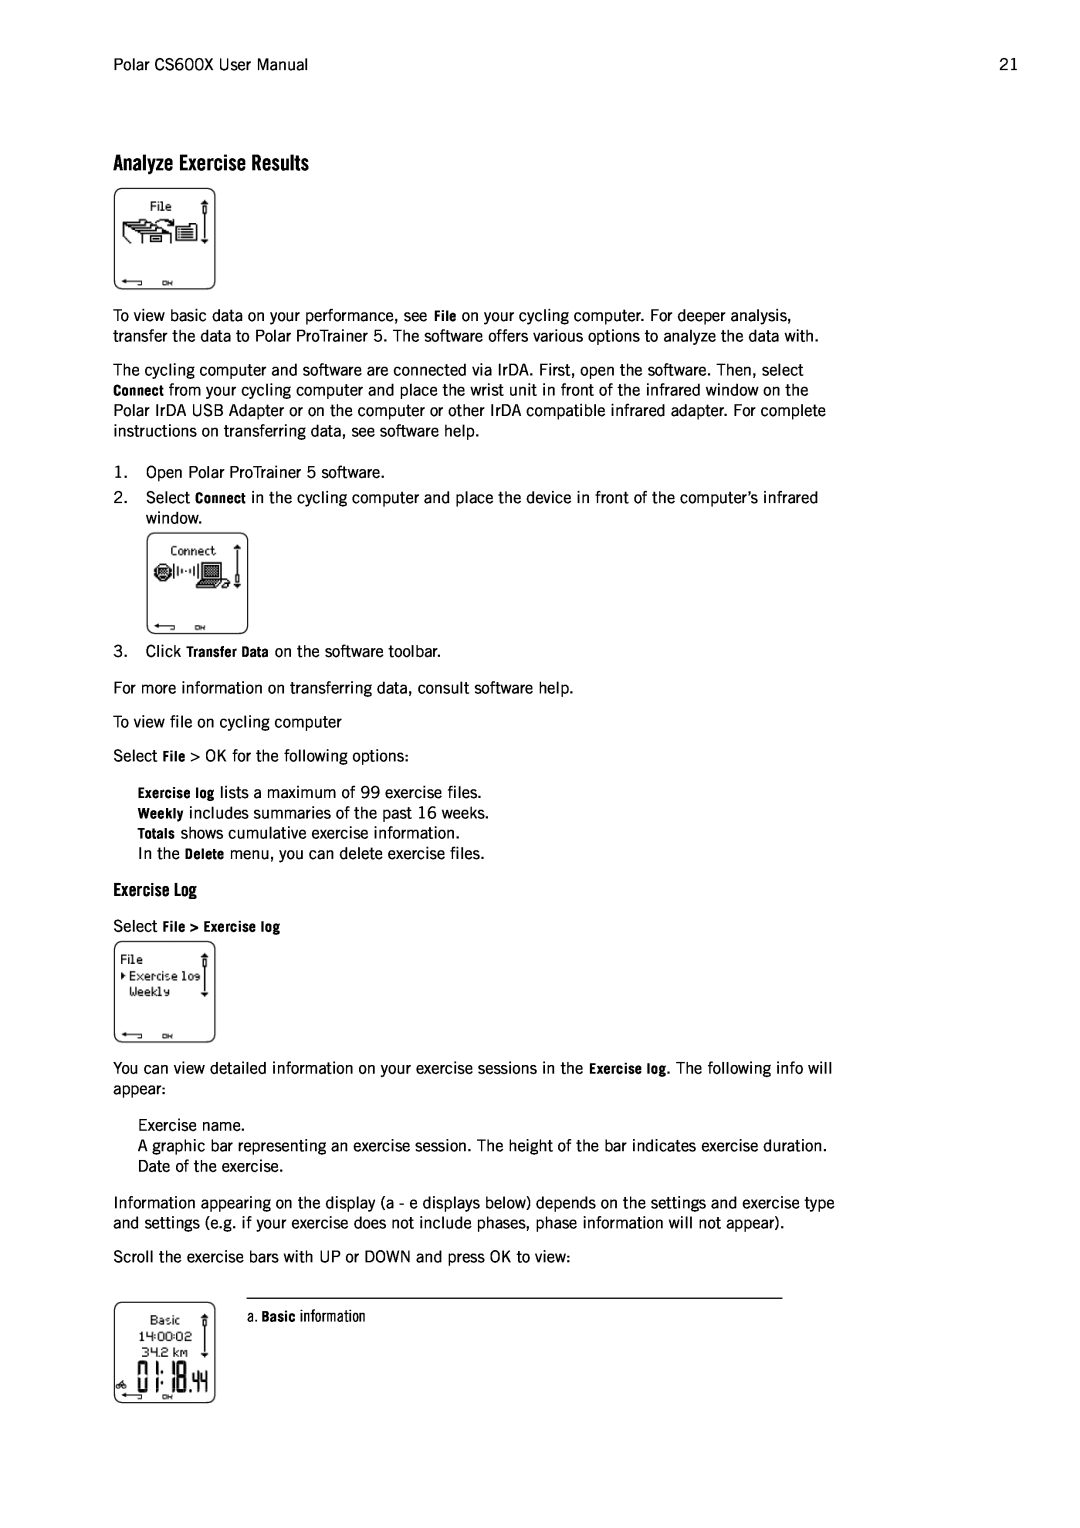 Polar CS600X user manual Analyze Exercise Results, Exercise Log 